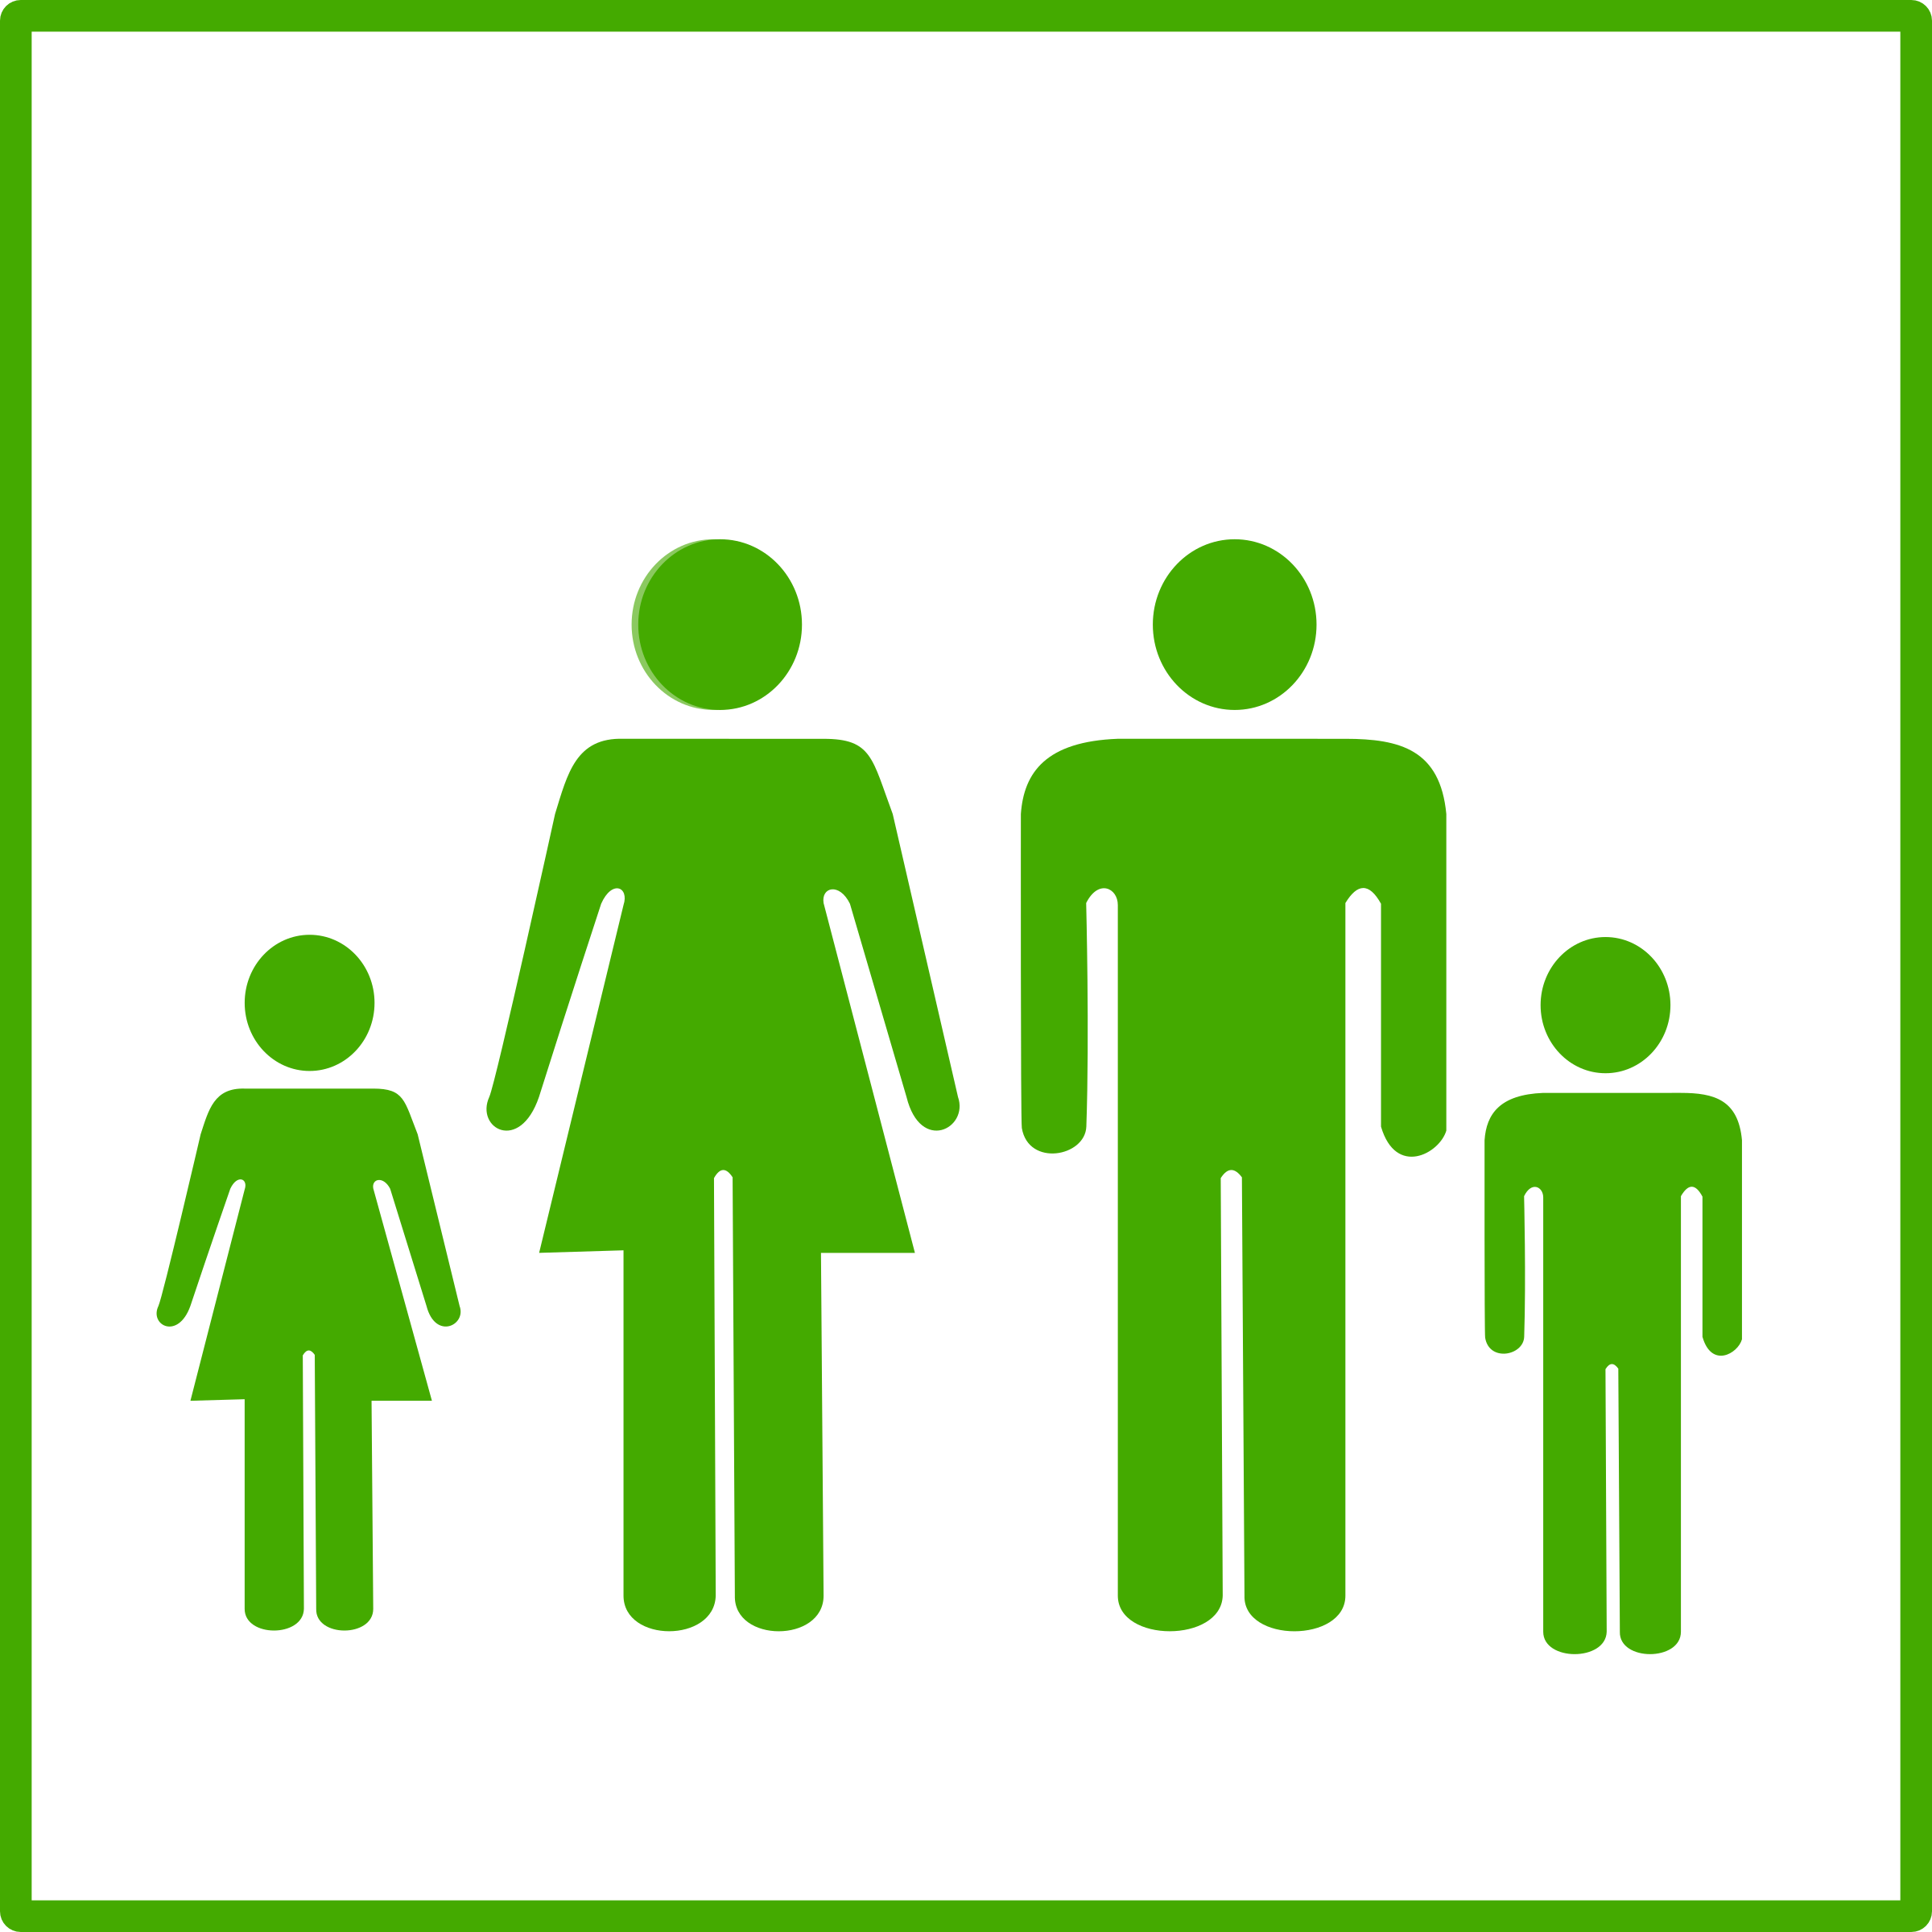 Family clipart vector. Bigheaded eco green icon